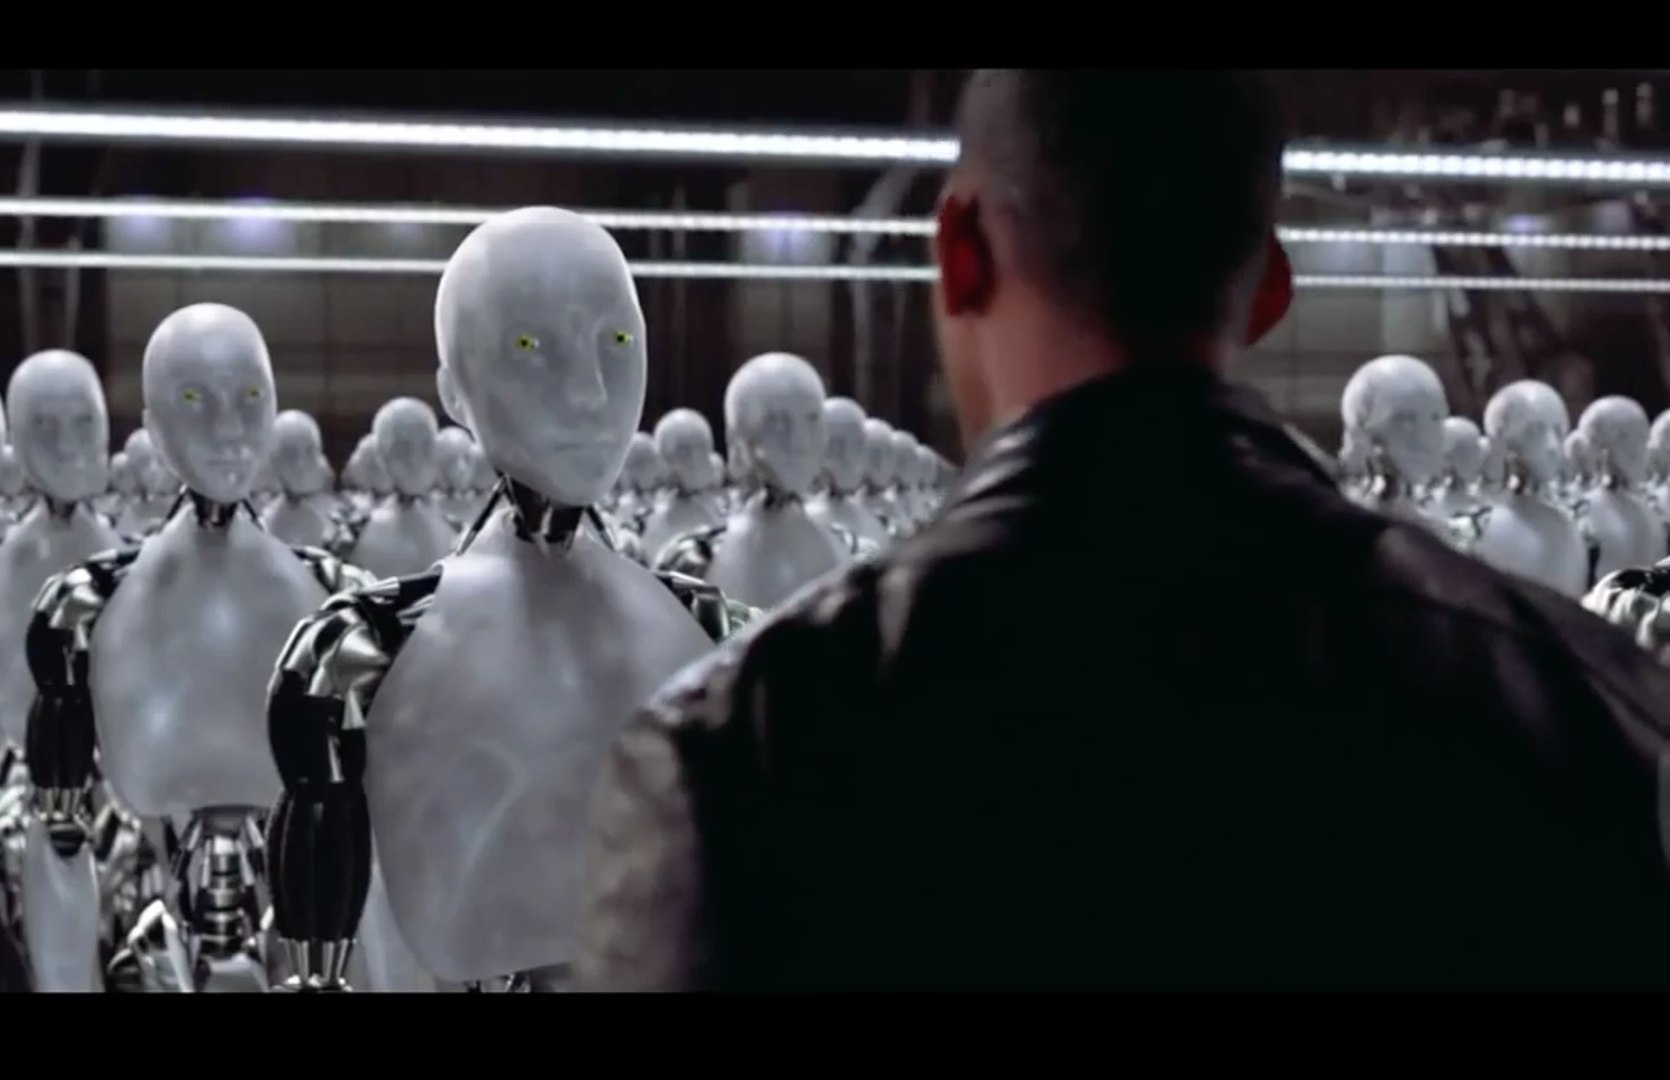 I, Robot - Official Trailer [HD] 